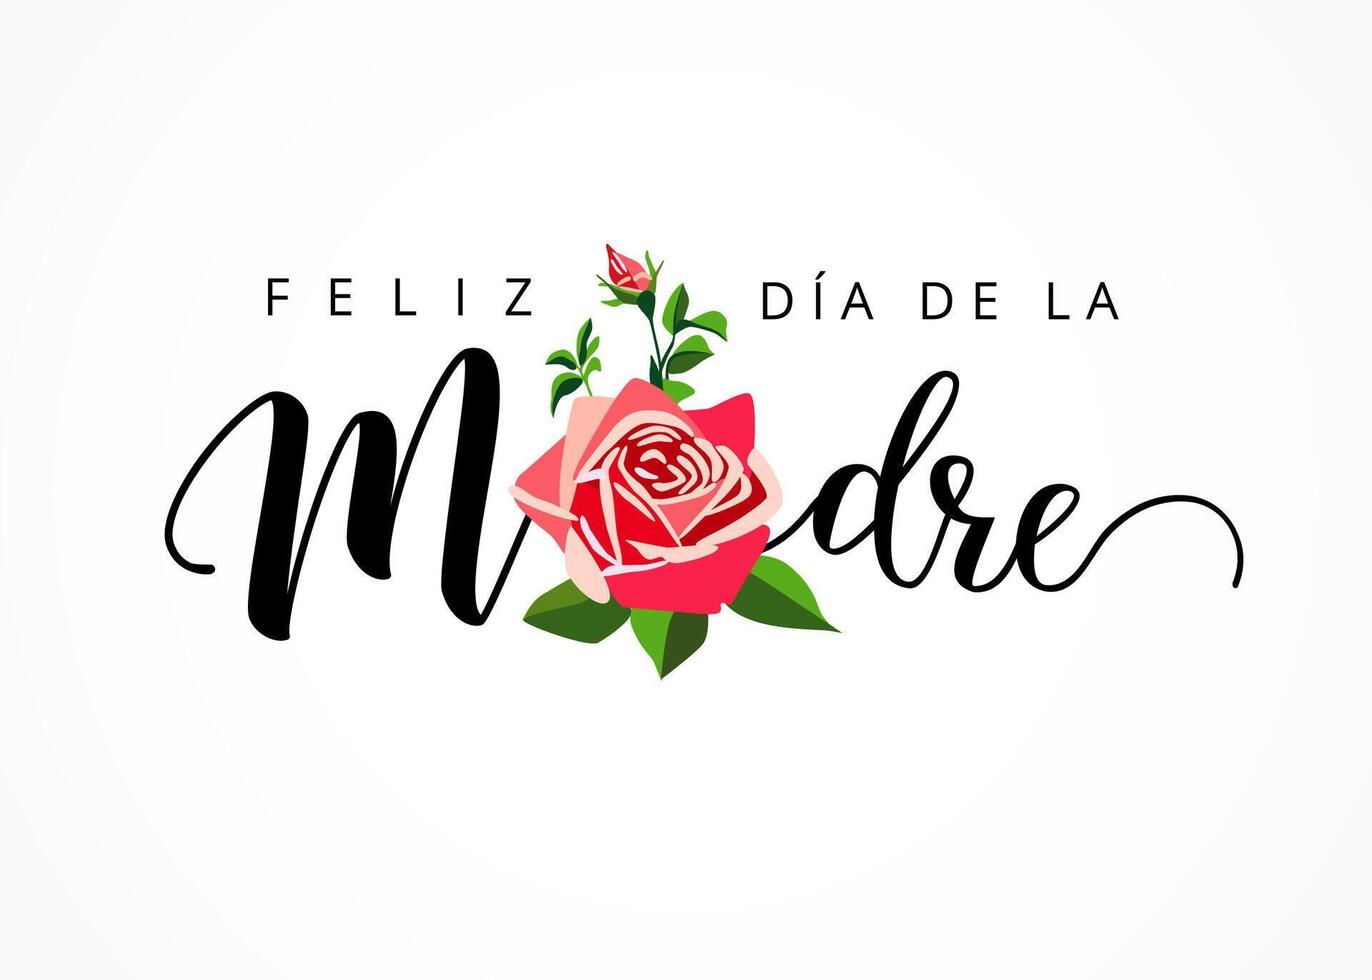 Feliz dia de la Madre - Happy Mother's Day Spanish greeting card vector